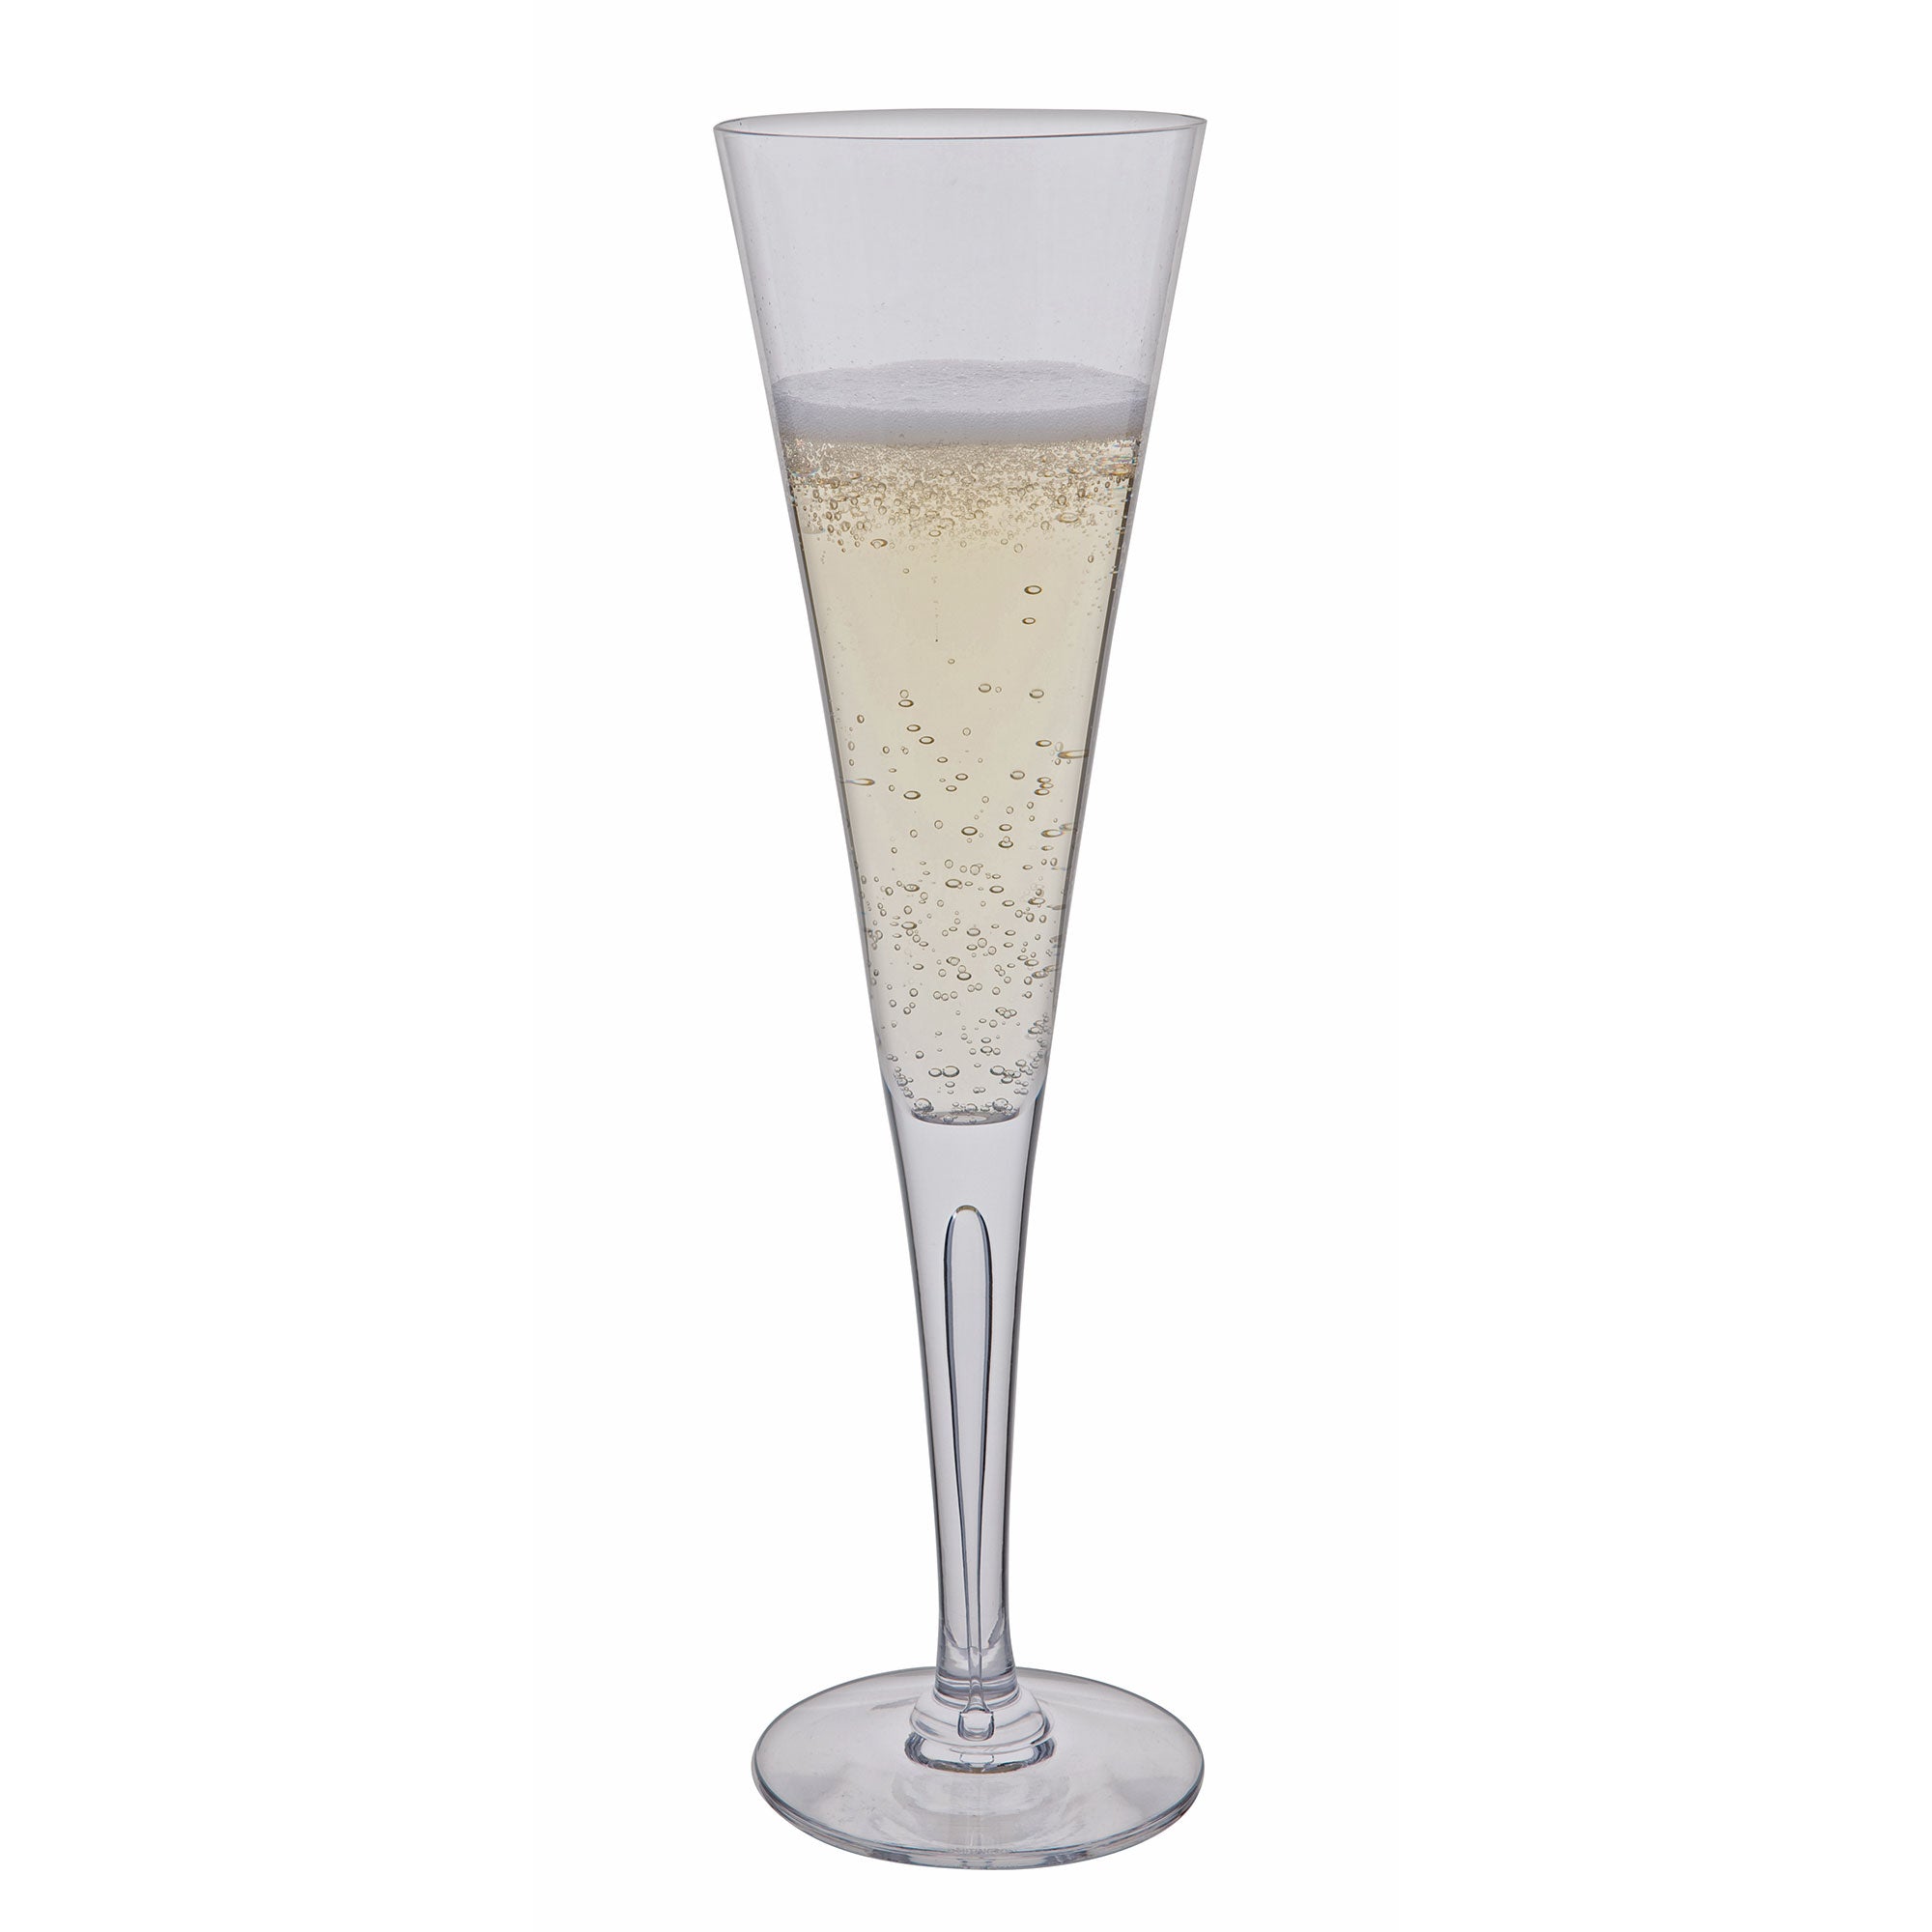 Dartington Sharon - Set of 2 Champagne Flutes